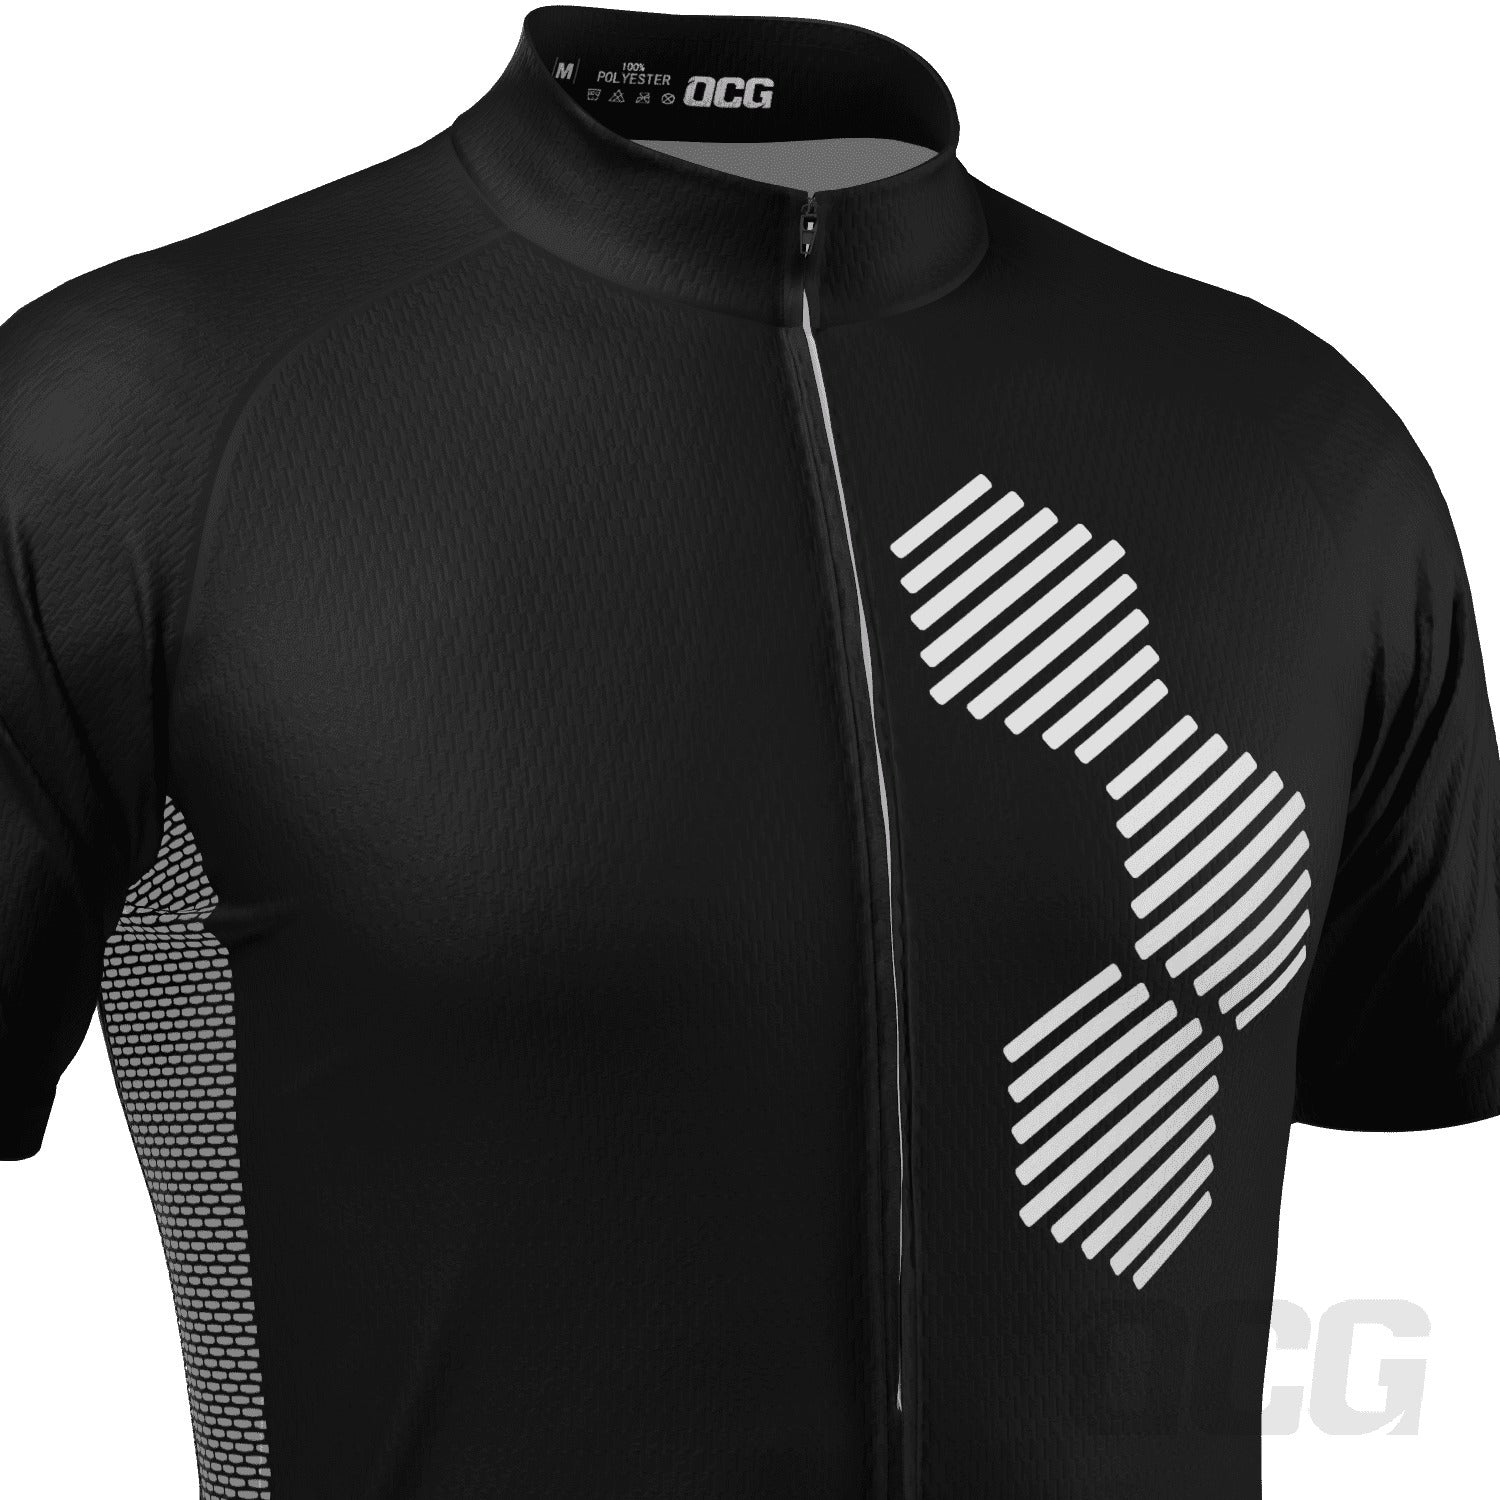 Men's Hexagon Short Sleeve Cycling Jersey